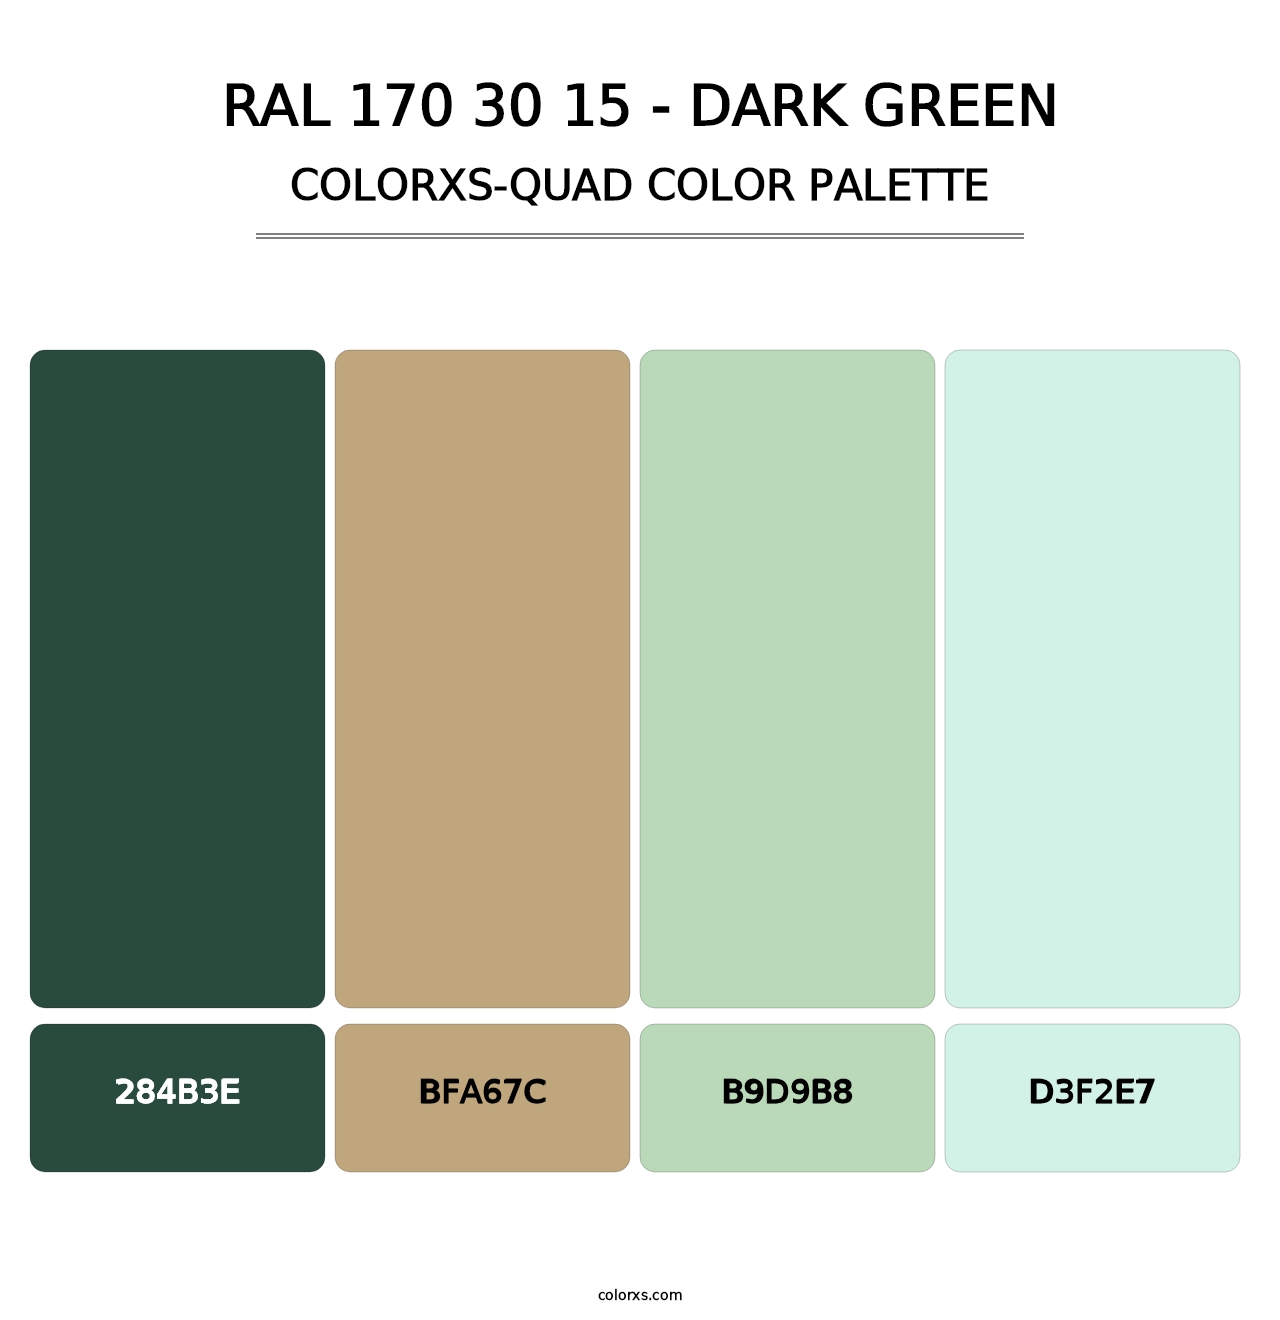 RAL 170 30 15 - Dark Green - Colorxs Quad Palette